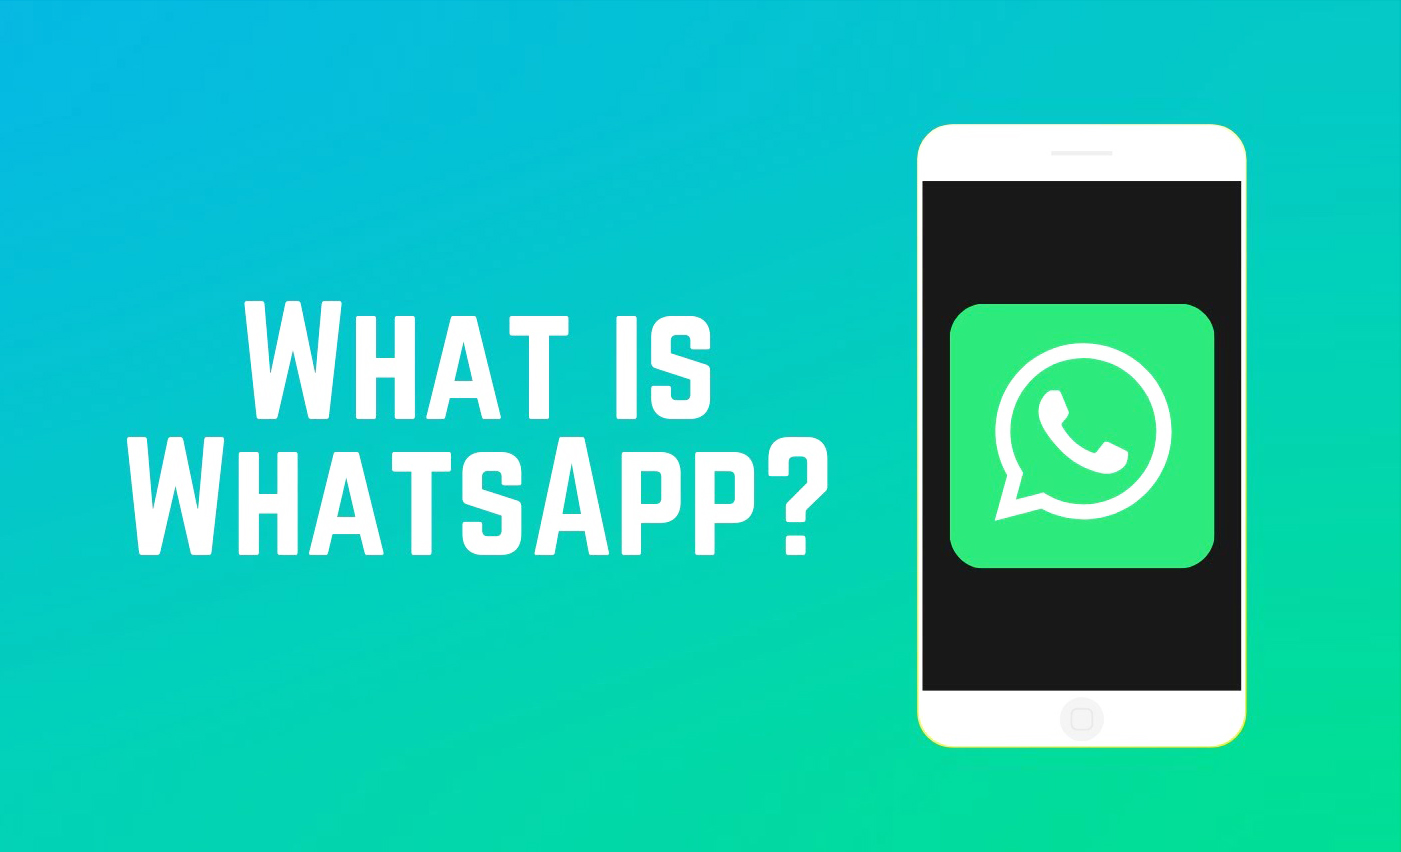 WhatsApp是啥软件？WhatsApp什么意思？怎么读？中文叫什么？